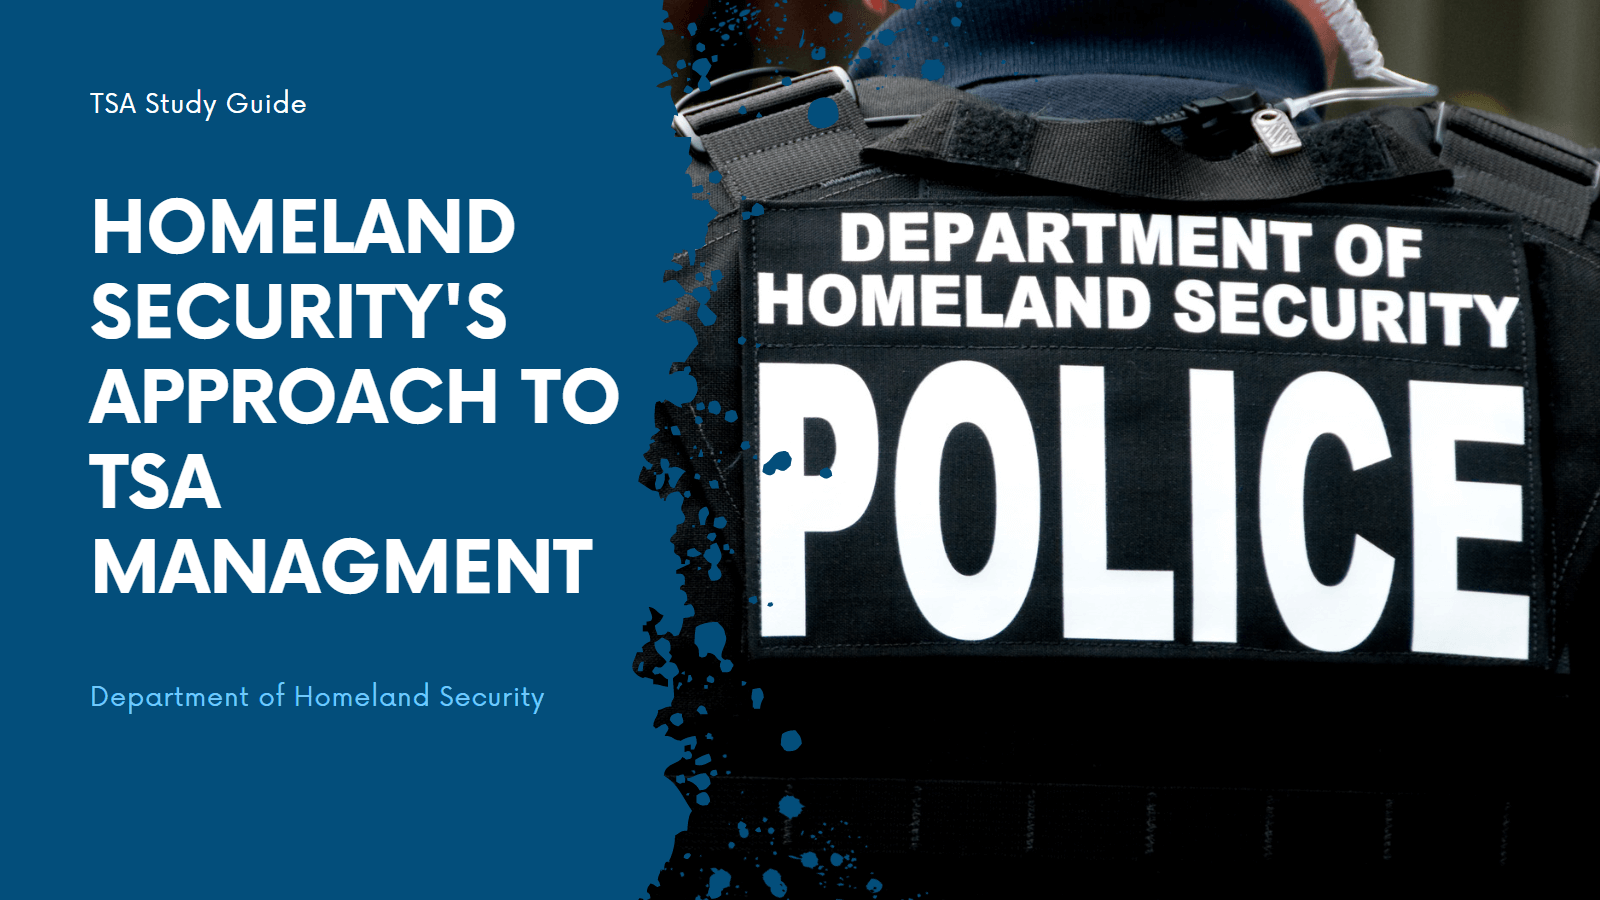 Homeland Security's Approach to Tsa Managment